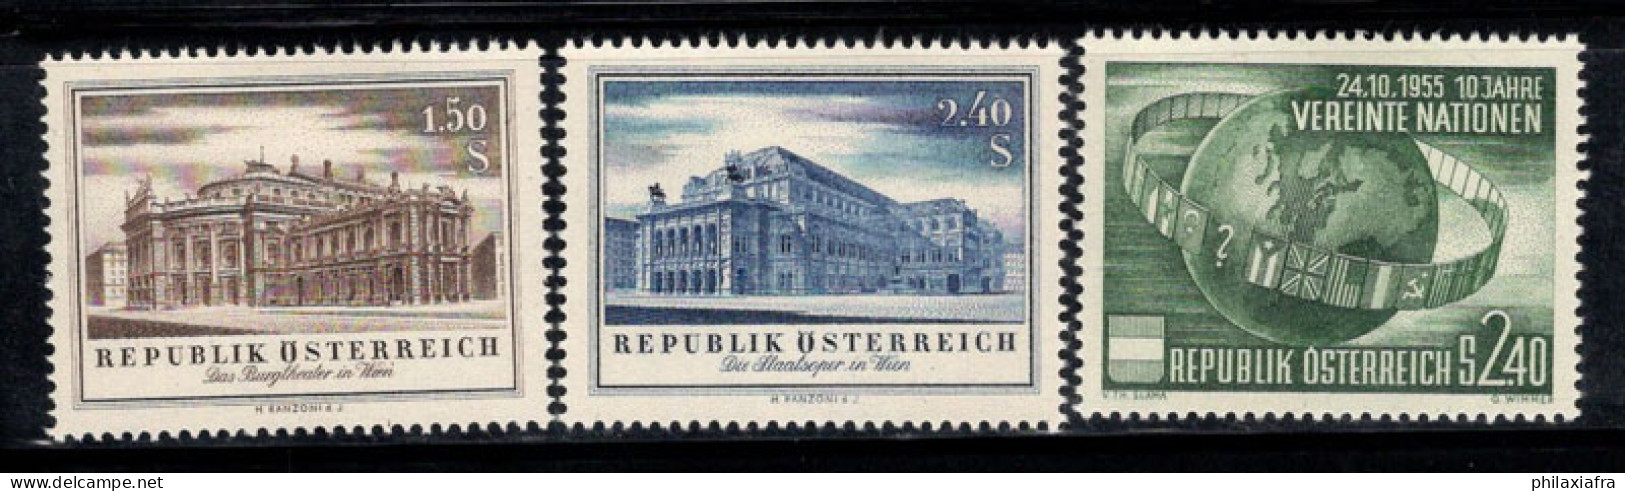 Autriche 1955 Mi. 1020-1022 Neuf * MH 100% ONU, THÉÂTRE, Opéra - Nuevos